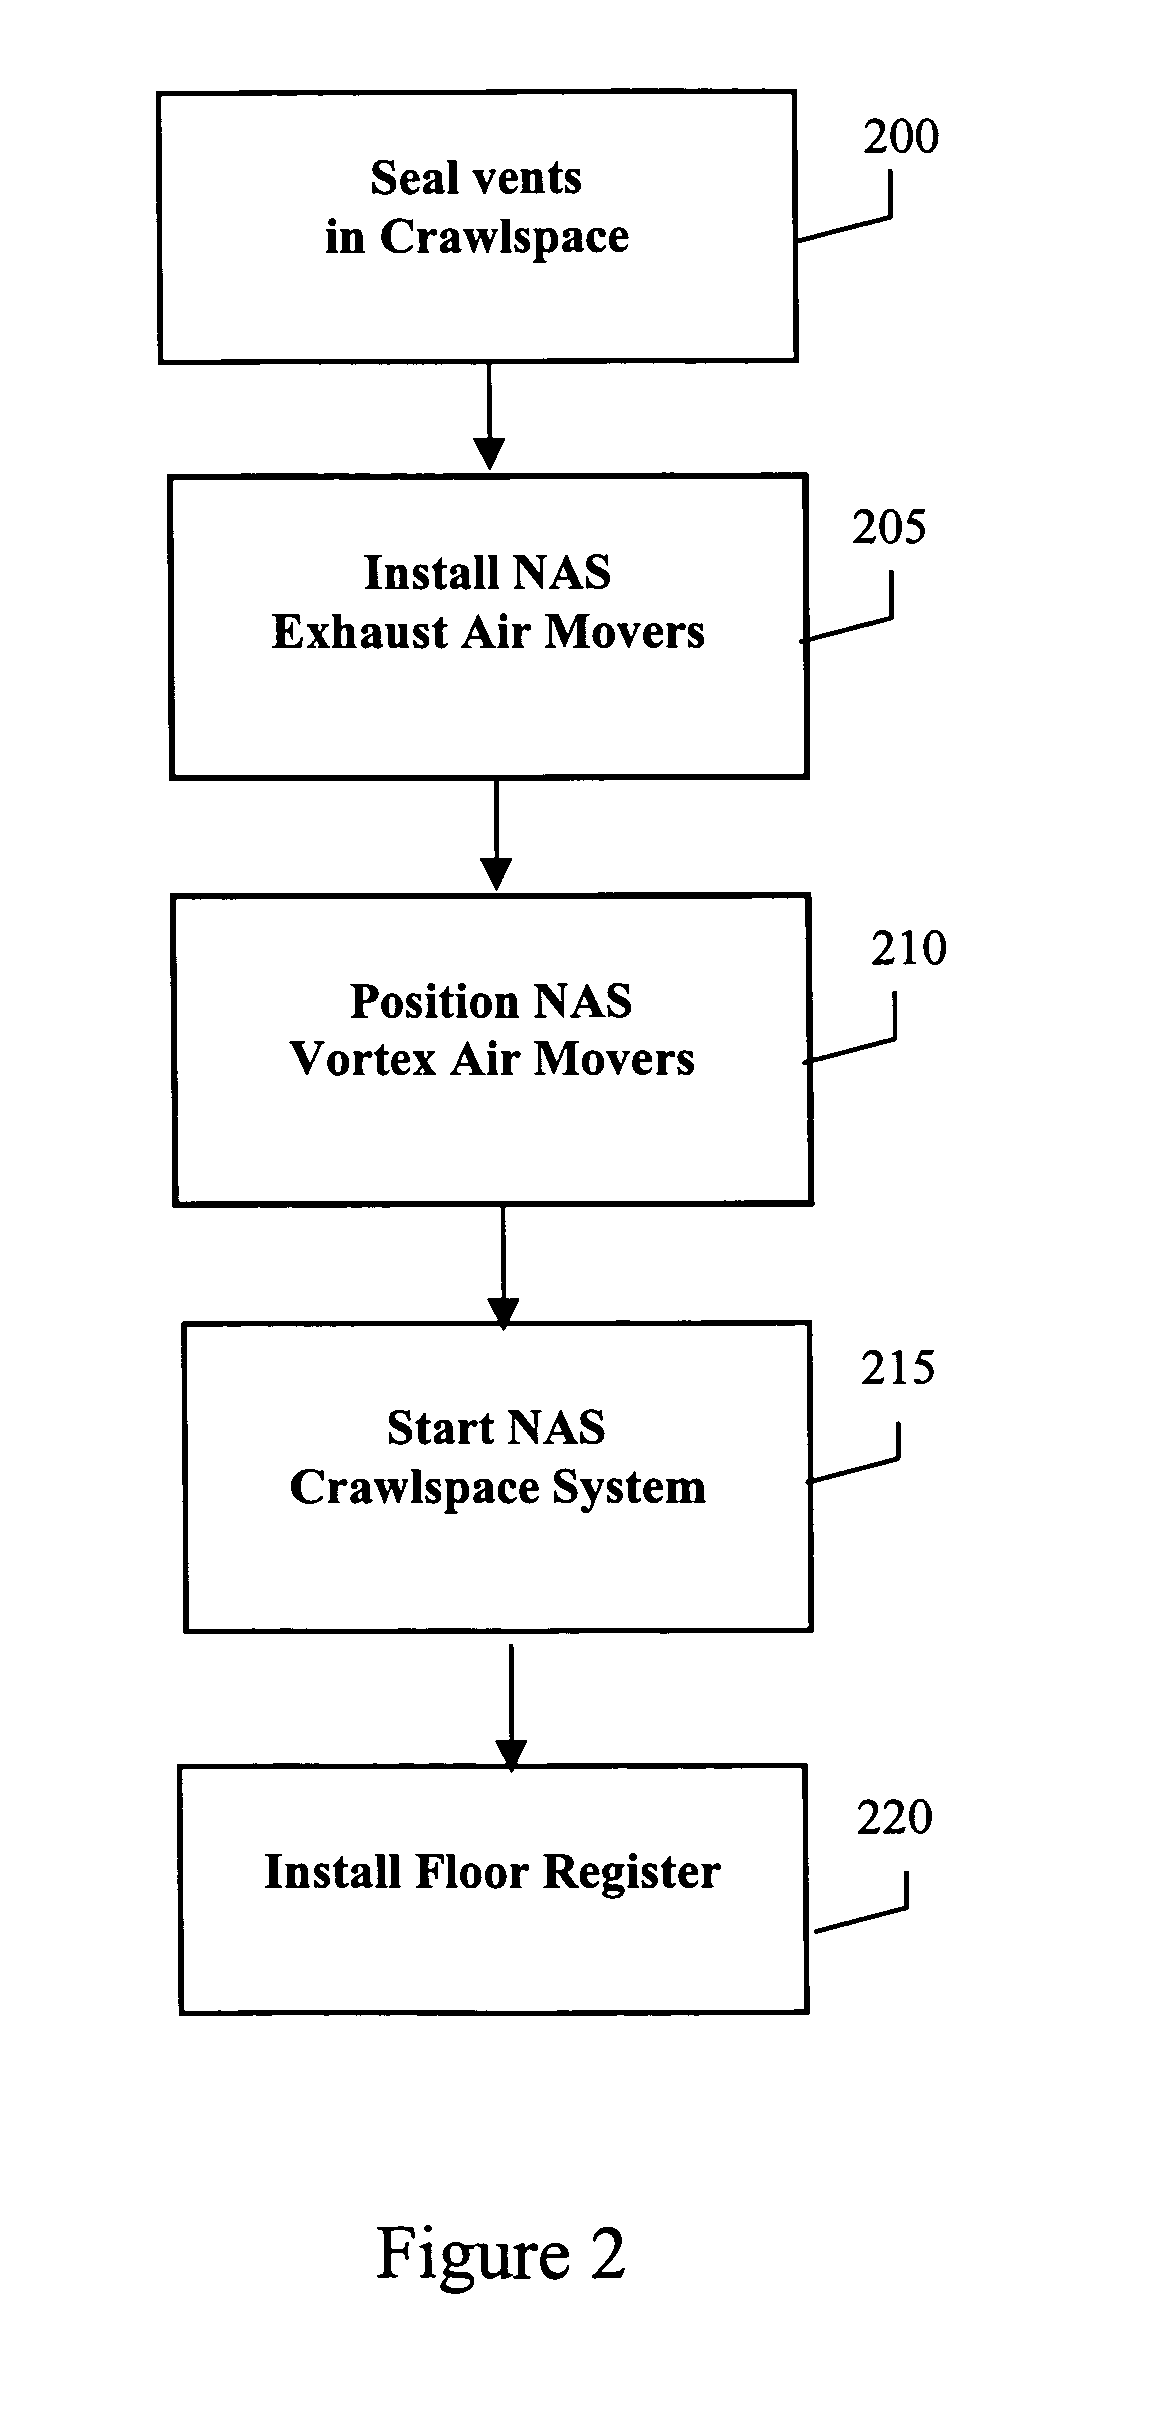 Negative air supplied (NAS) crawlspace system